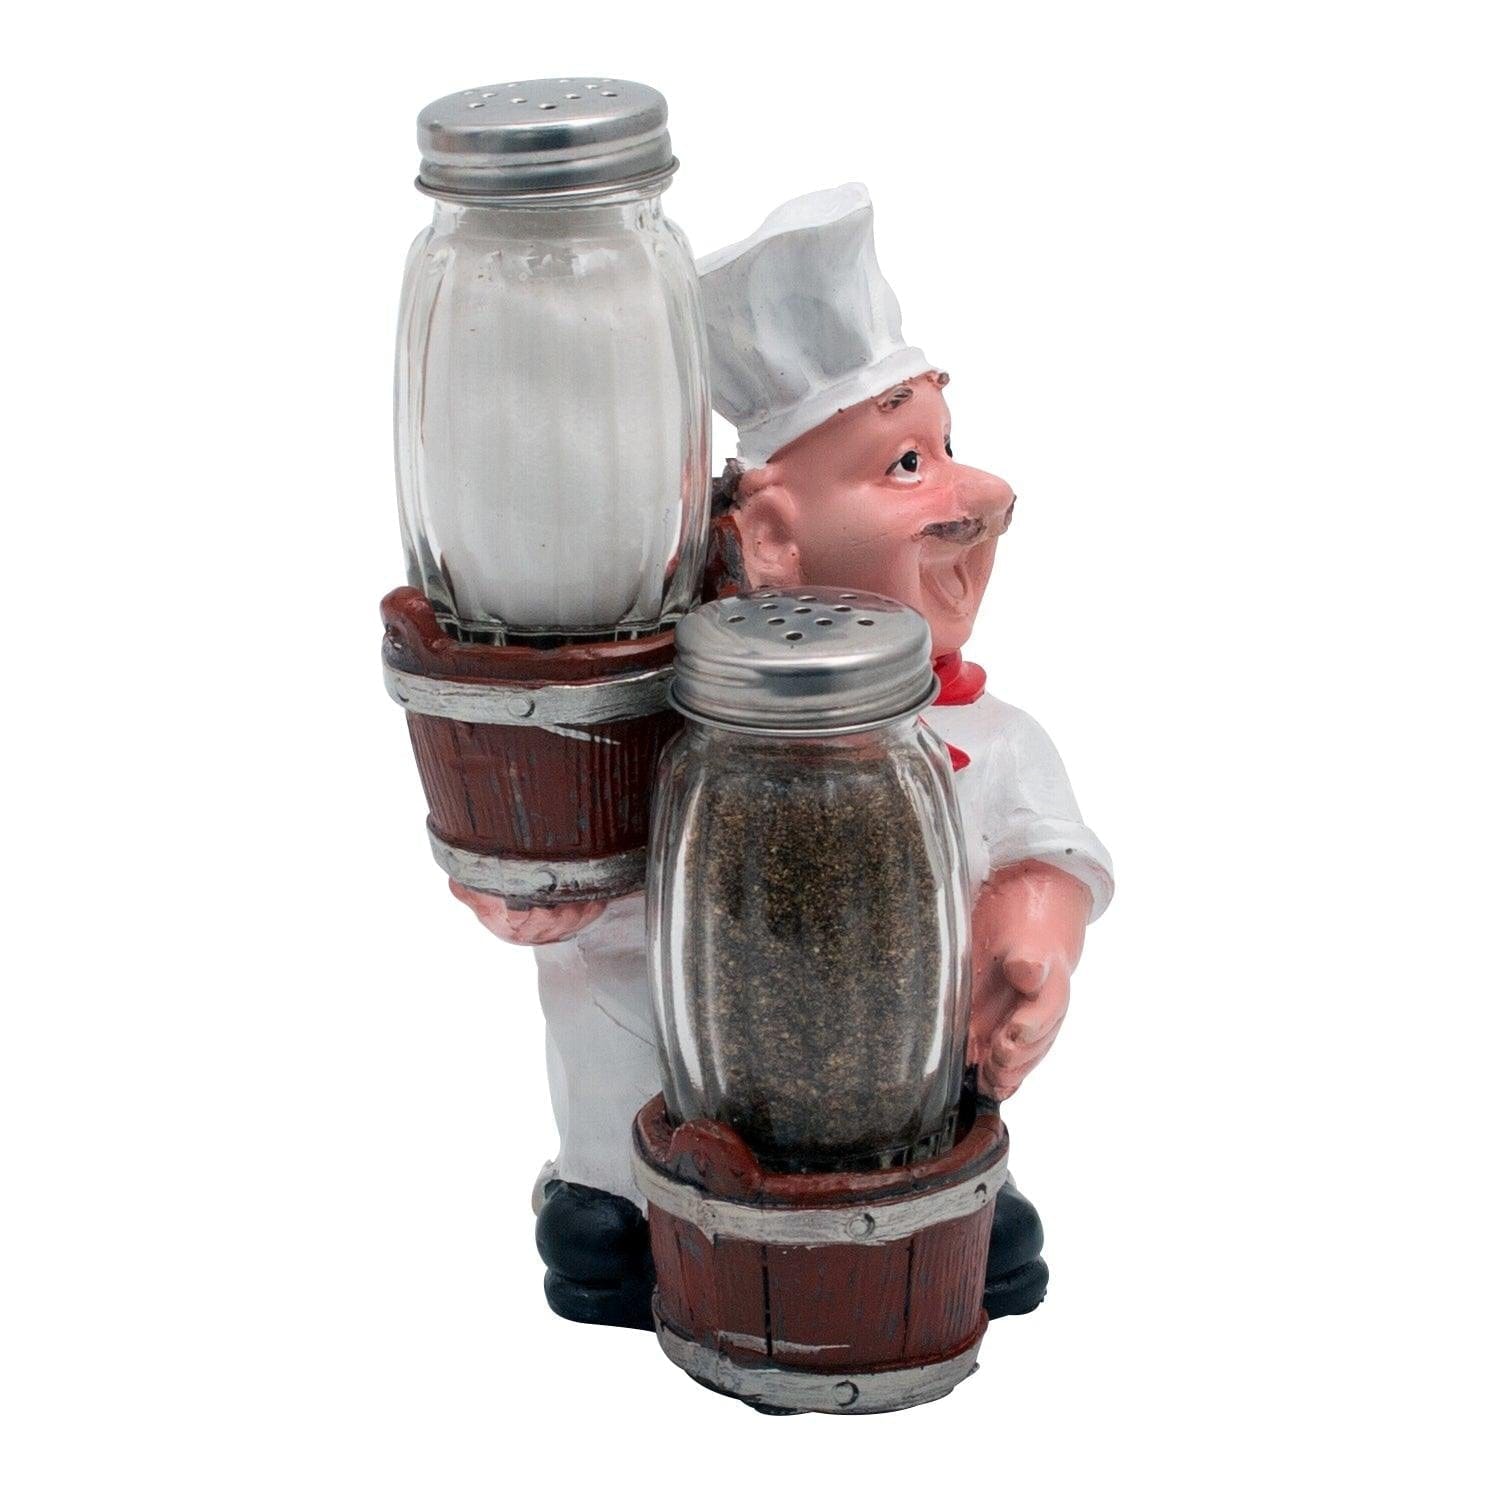 Foodie Chef Figurine Resin Salt & Pepper Shakers in Basket Holder Set (Left)